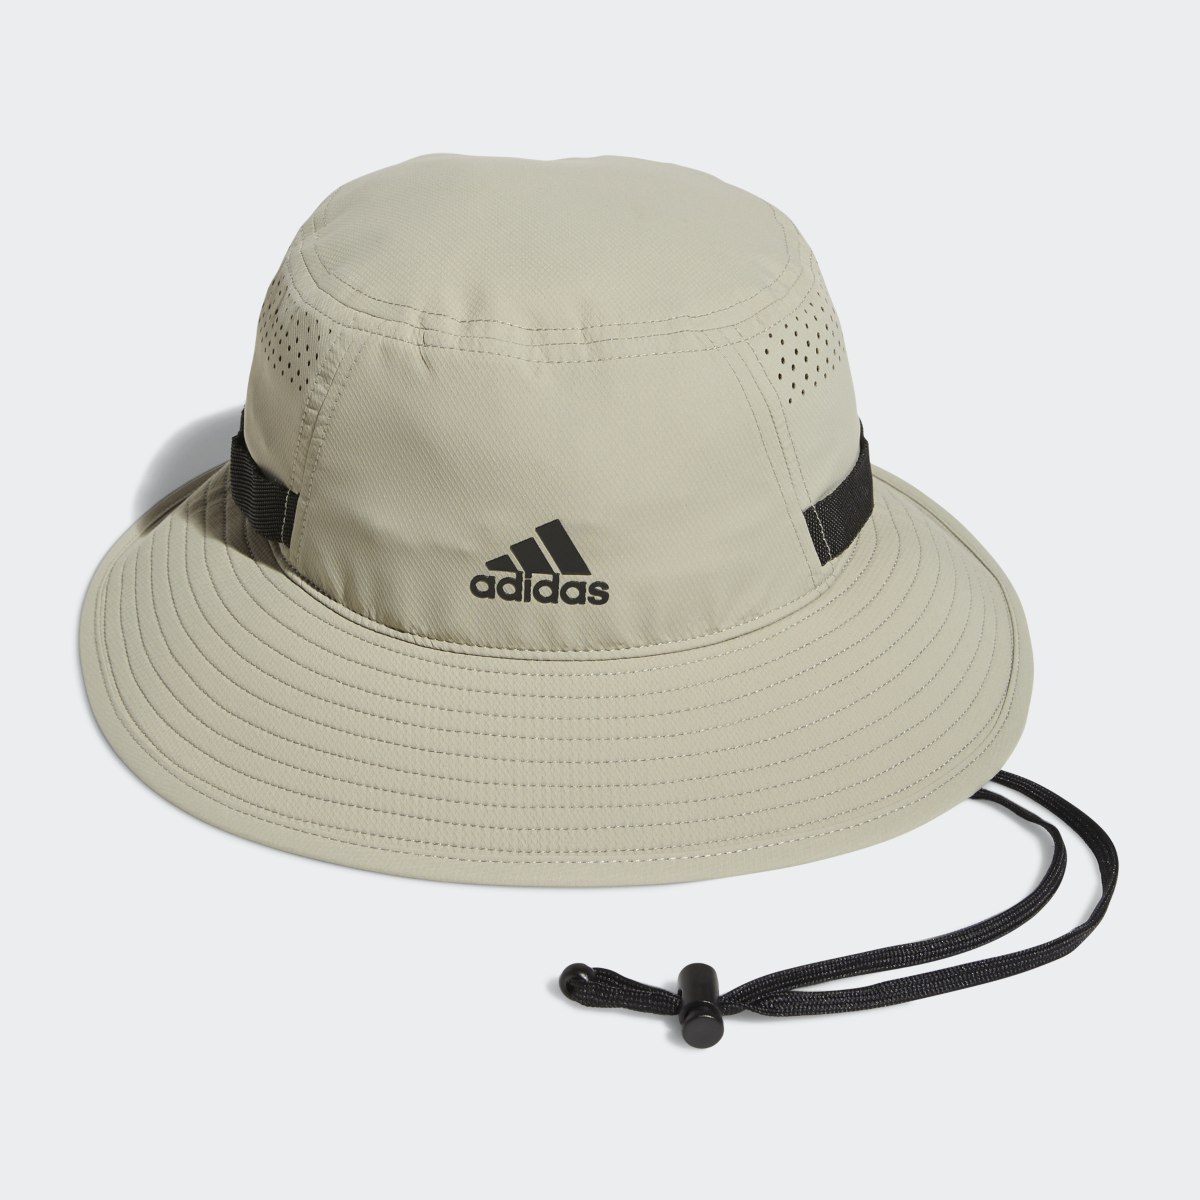 Adidas Victory Bucket Hat. 4